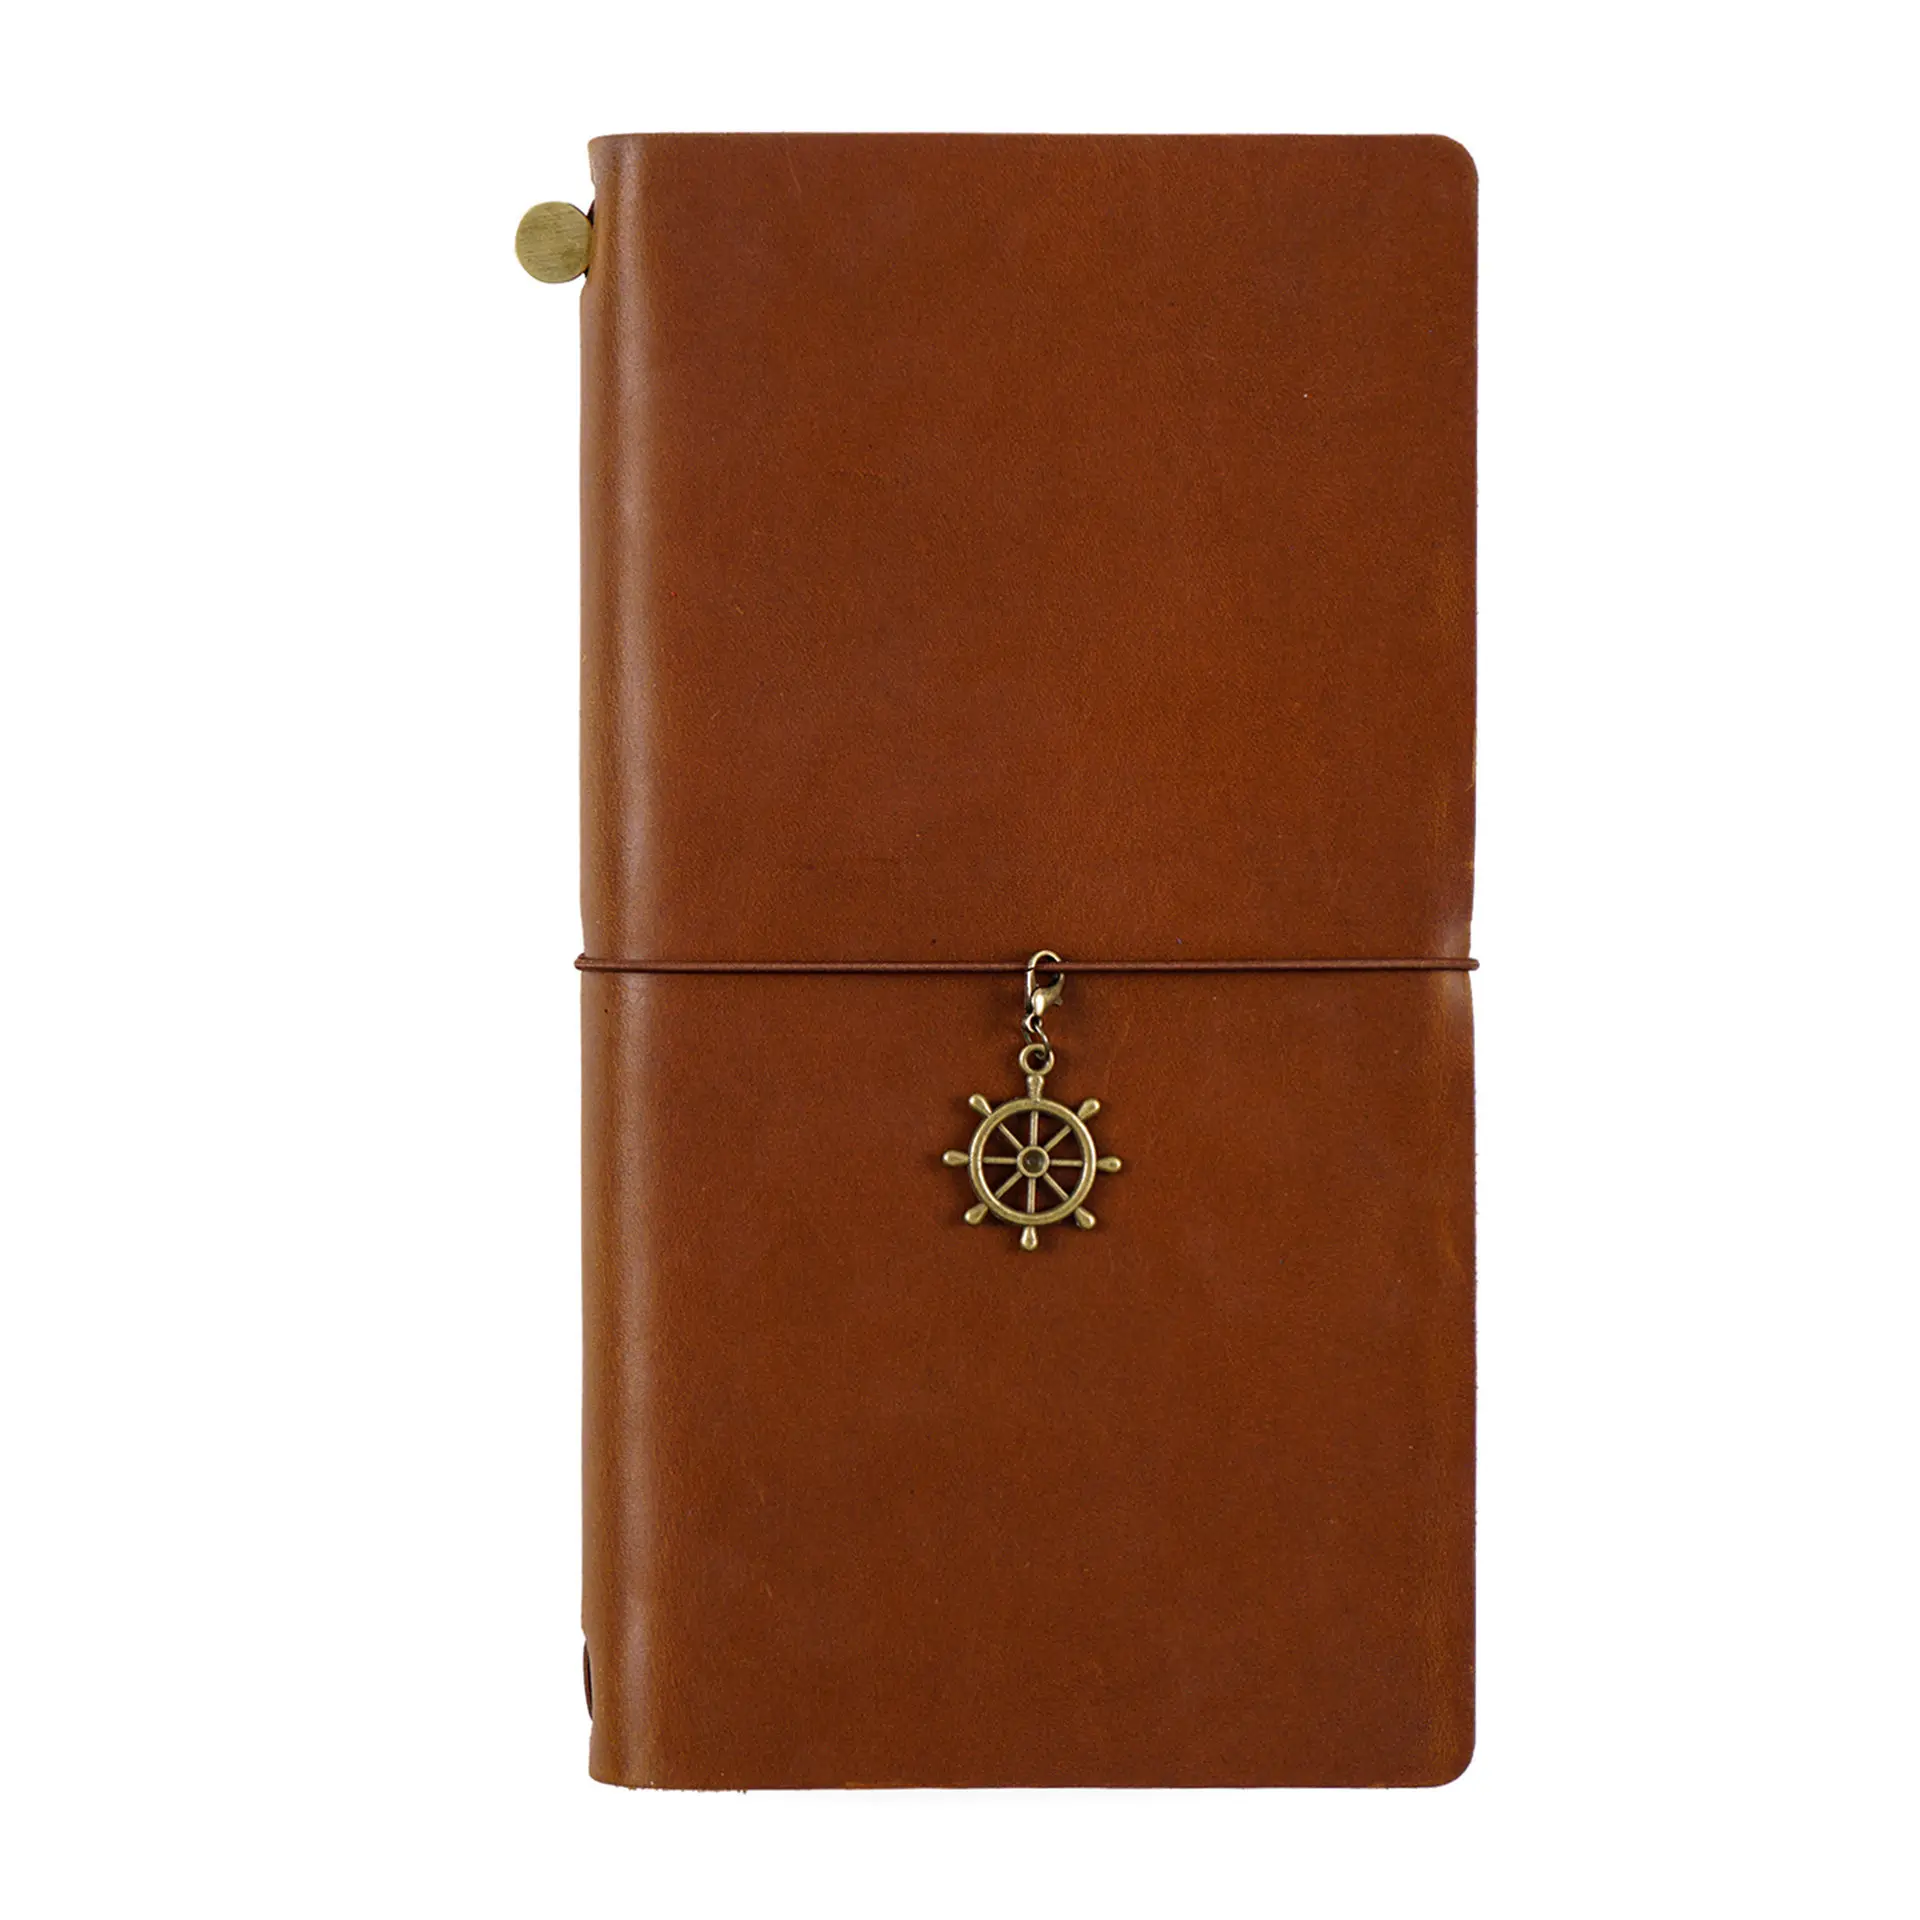 

100% Genuine Leather Notebook Handmade Vintage Cowhide Diary Standard Size TN Travel Notebook Cover Journal Sketchbook Planner